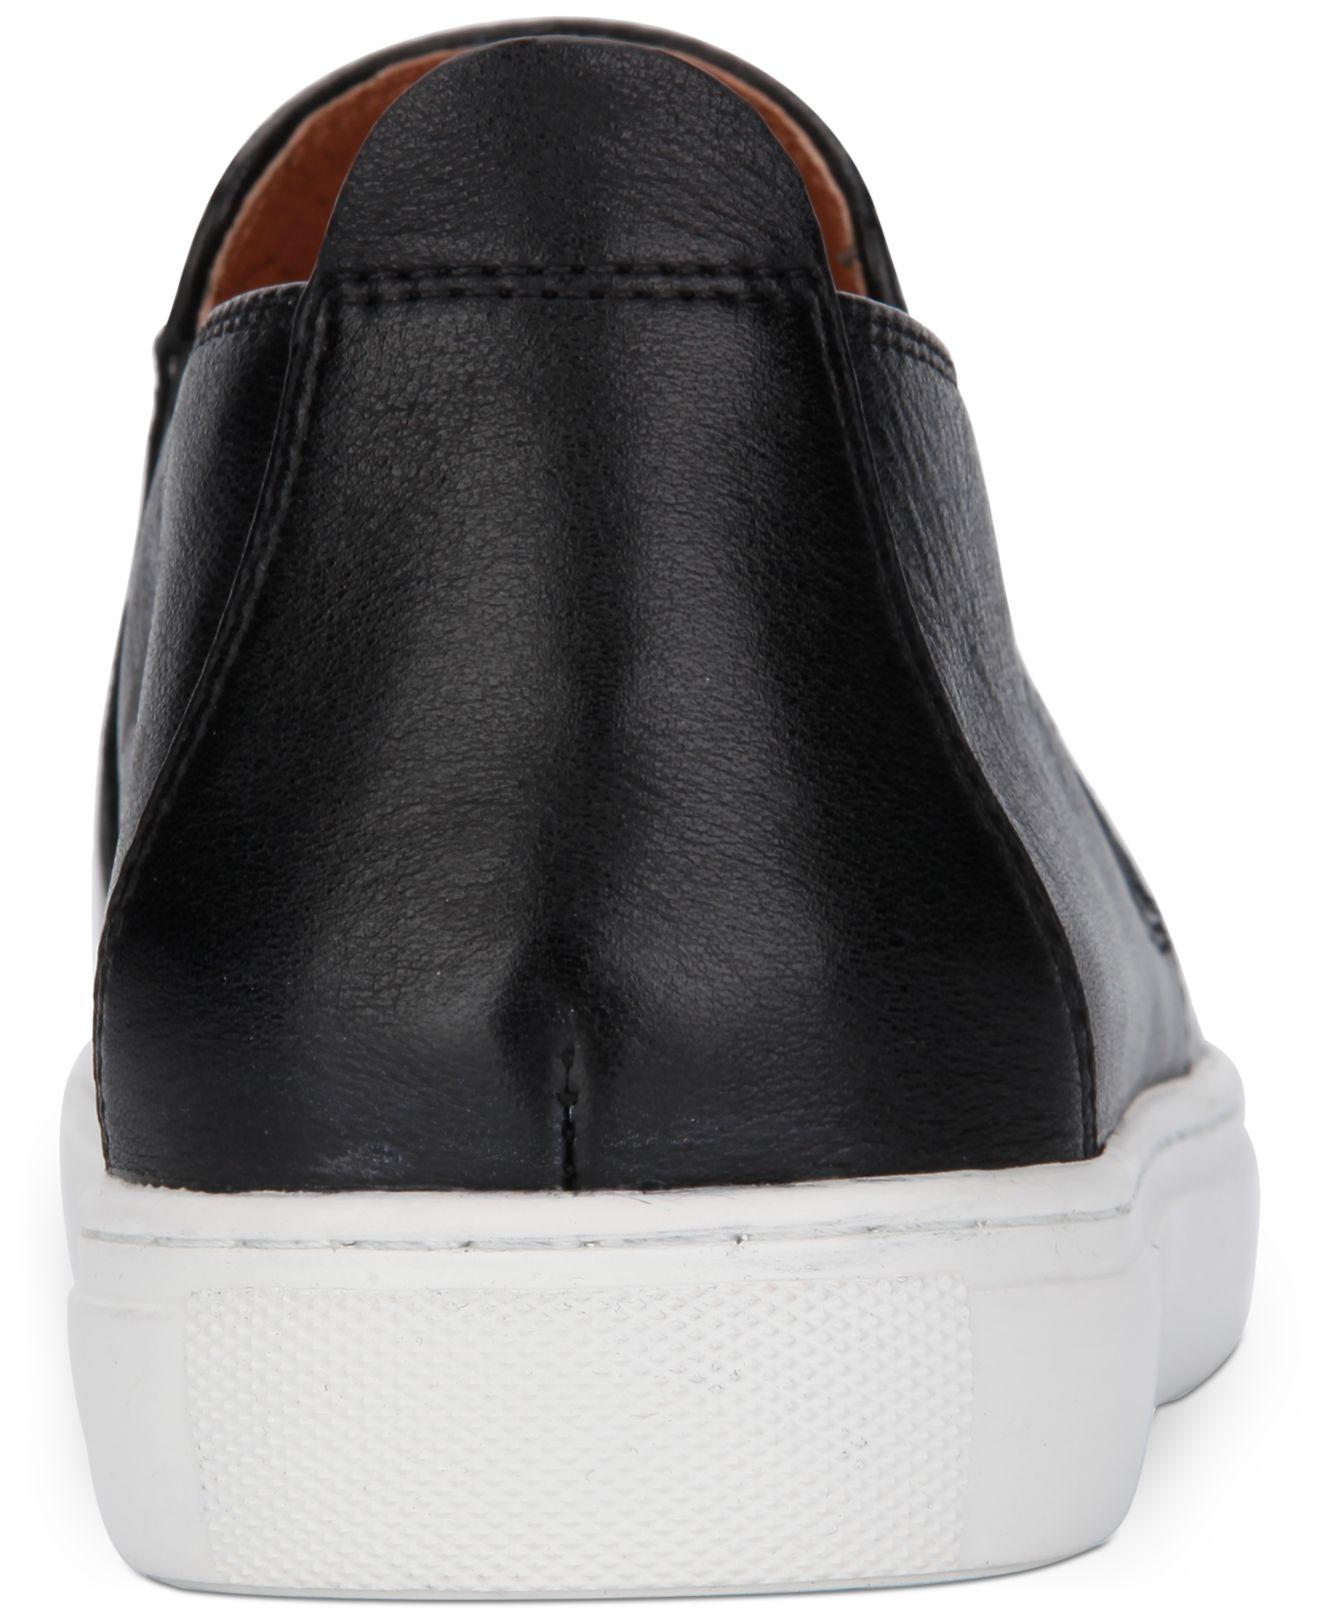 Gentle Souls Leather Lowe Slip-on Sneakers in Black Leather (Black) - Lyst